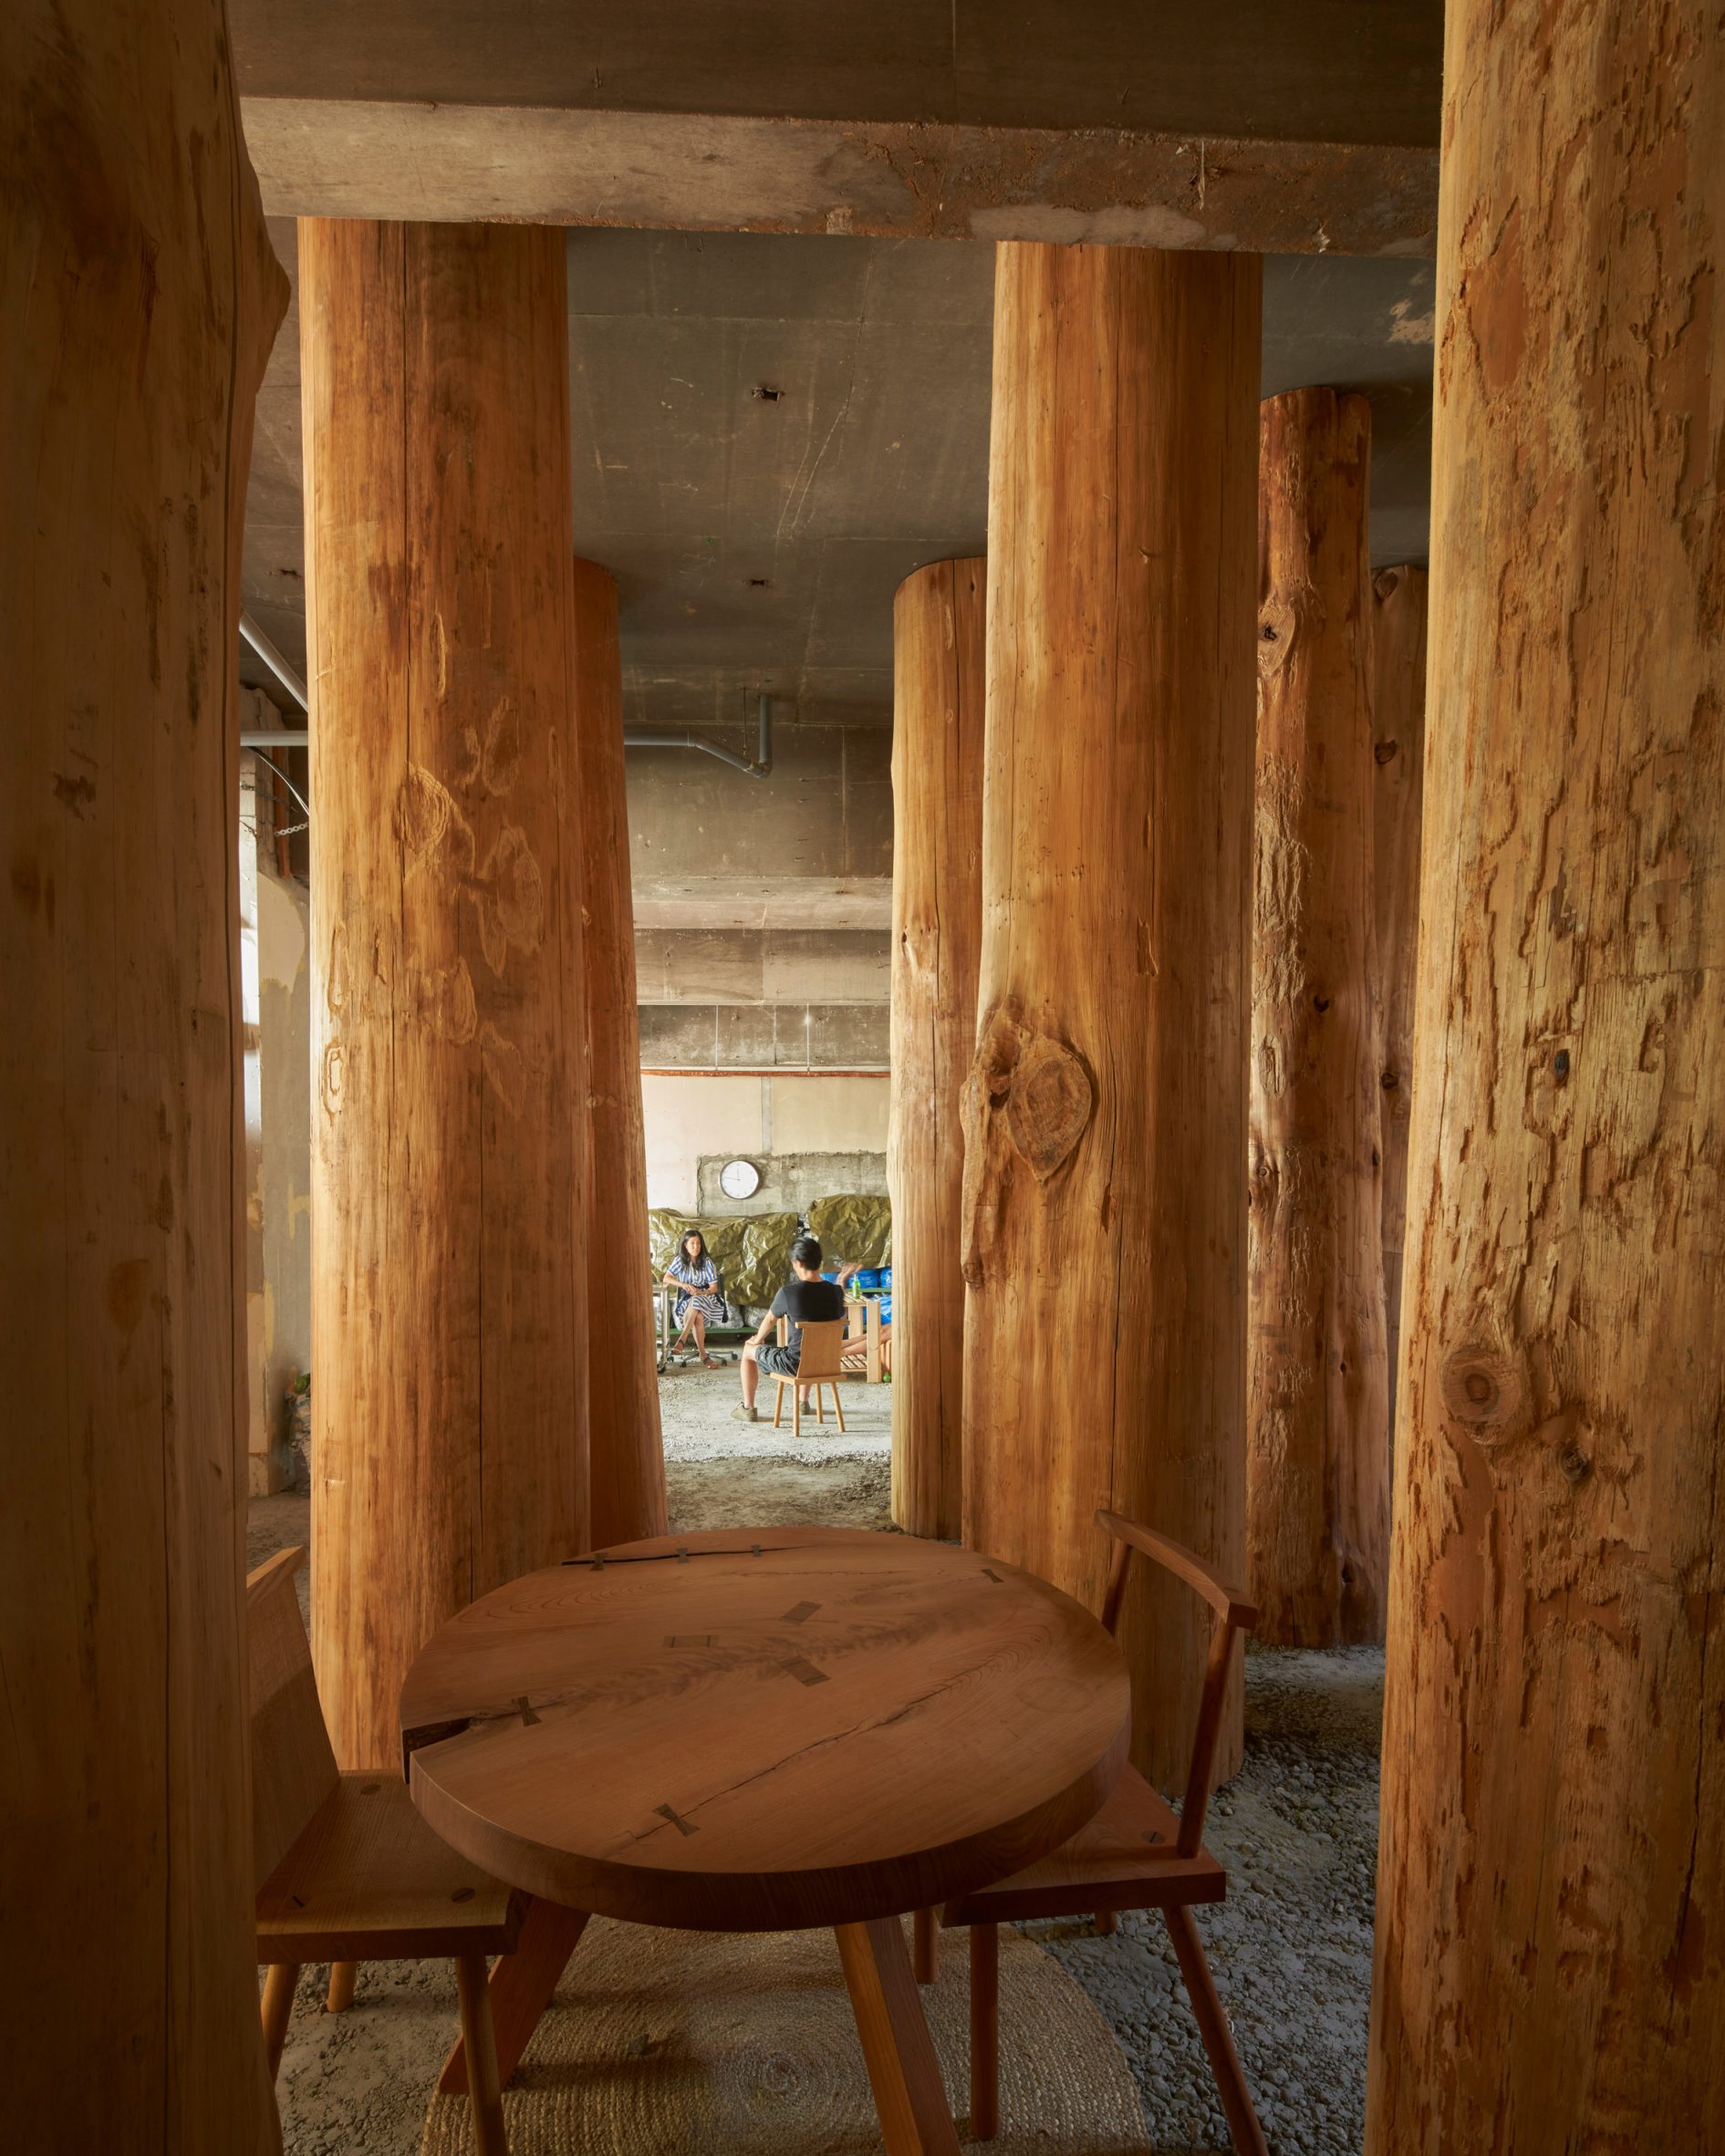 Barker Associates Architecture Office Creates Unexpected Interiors